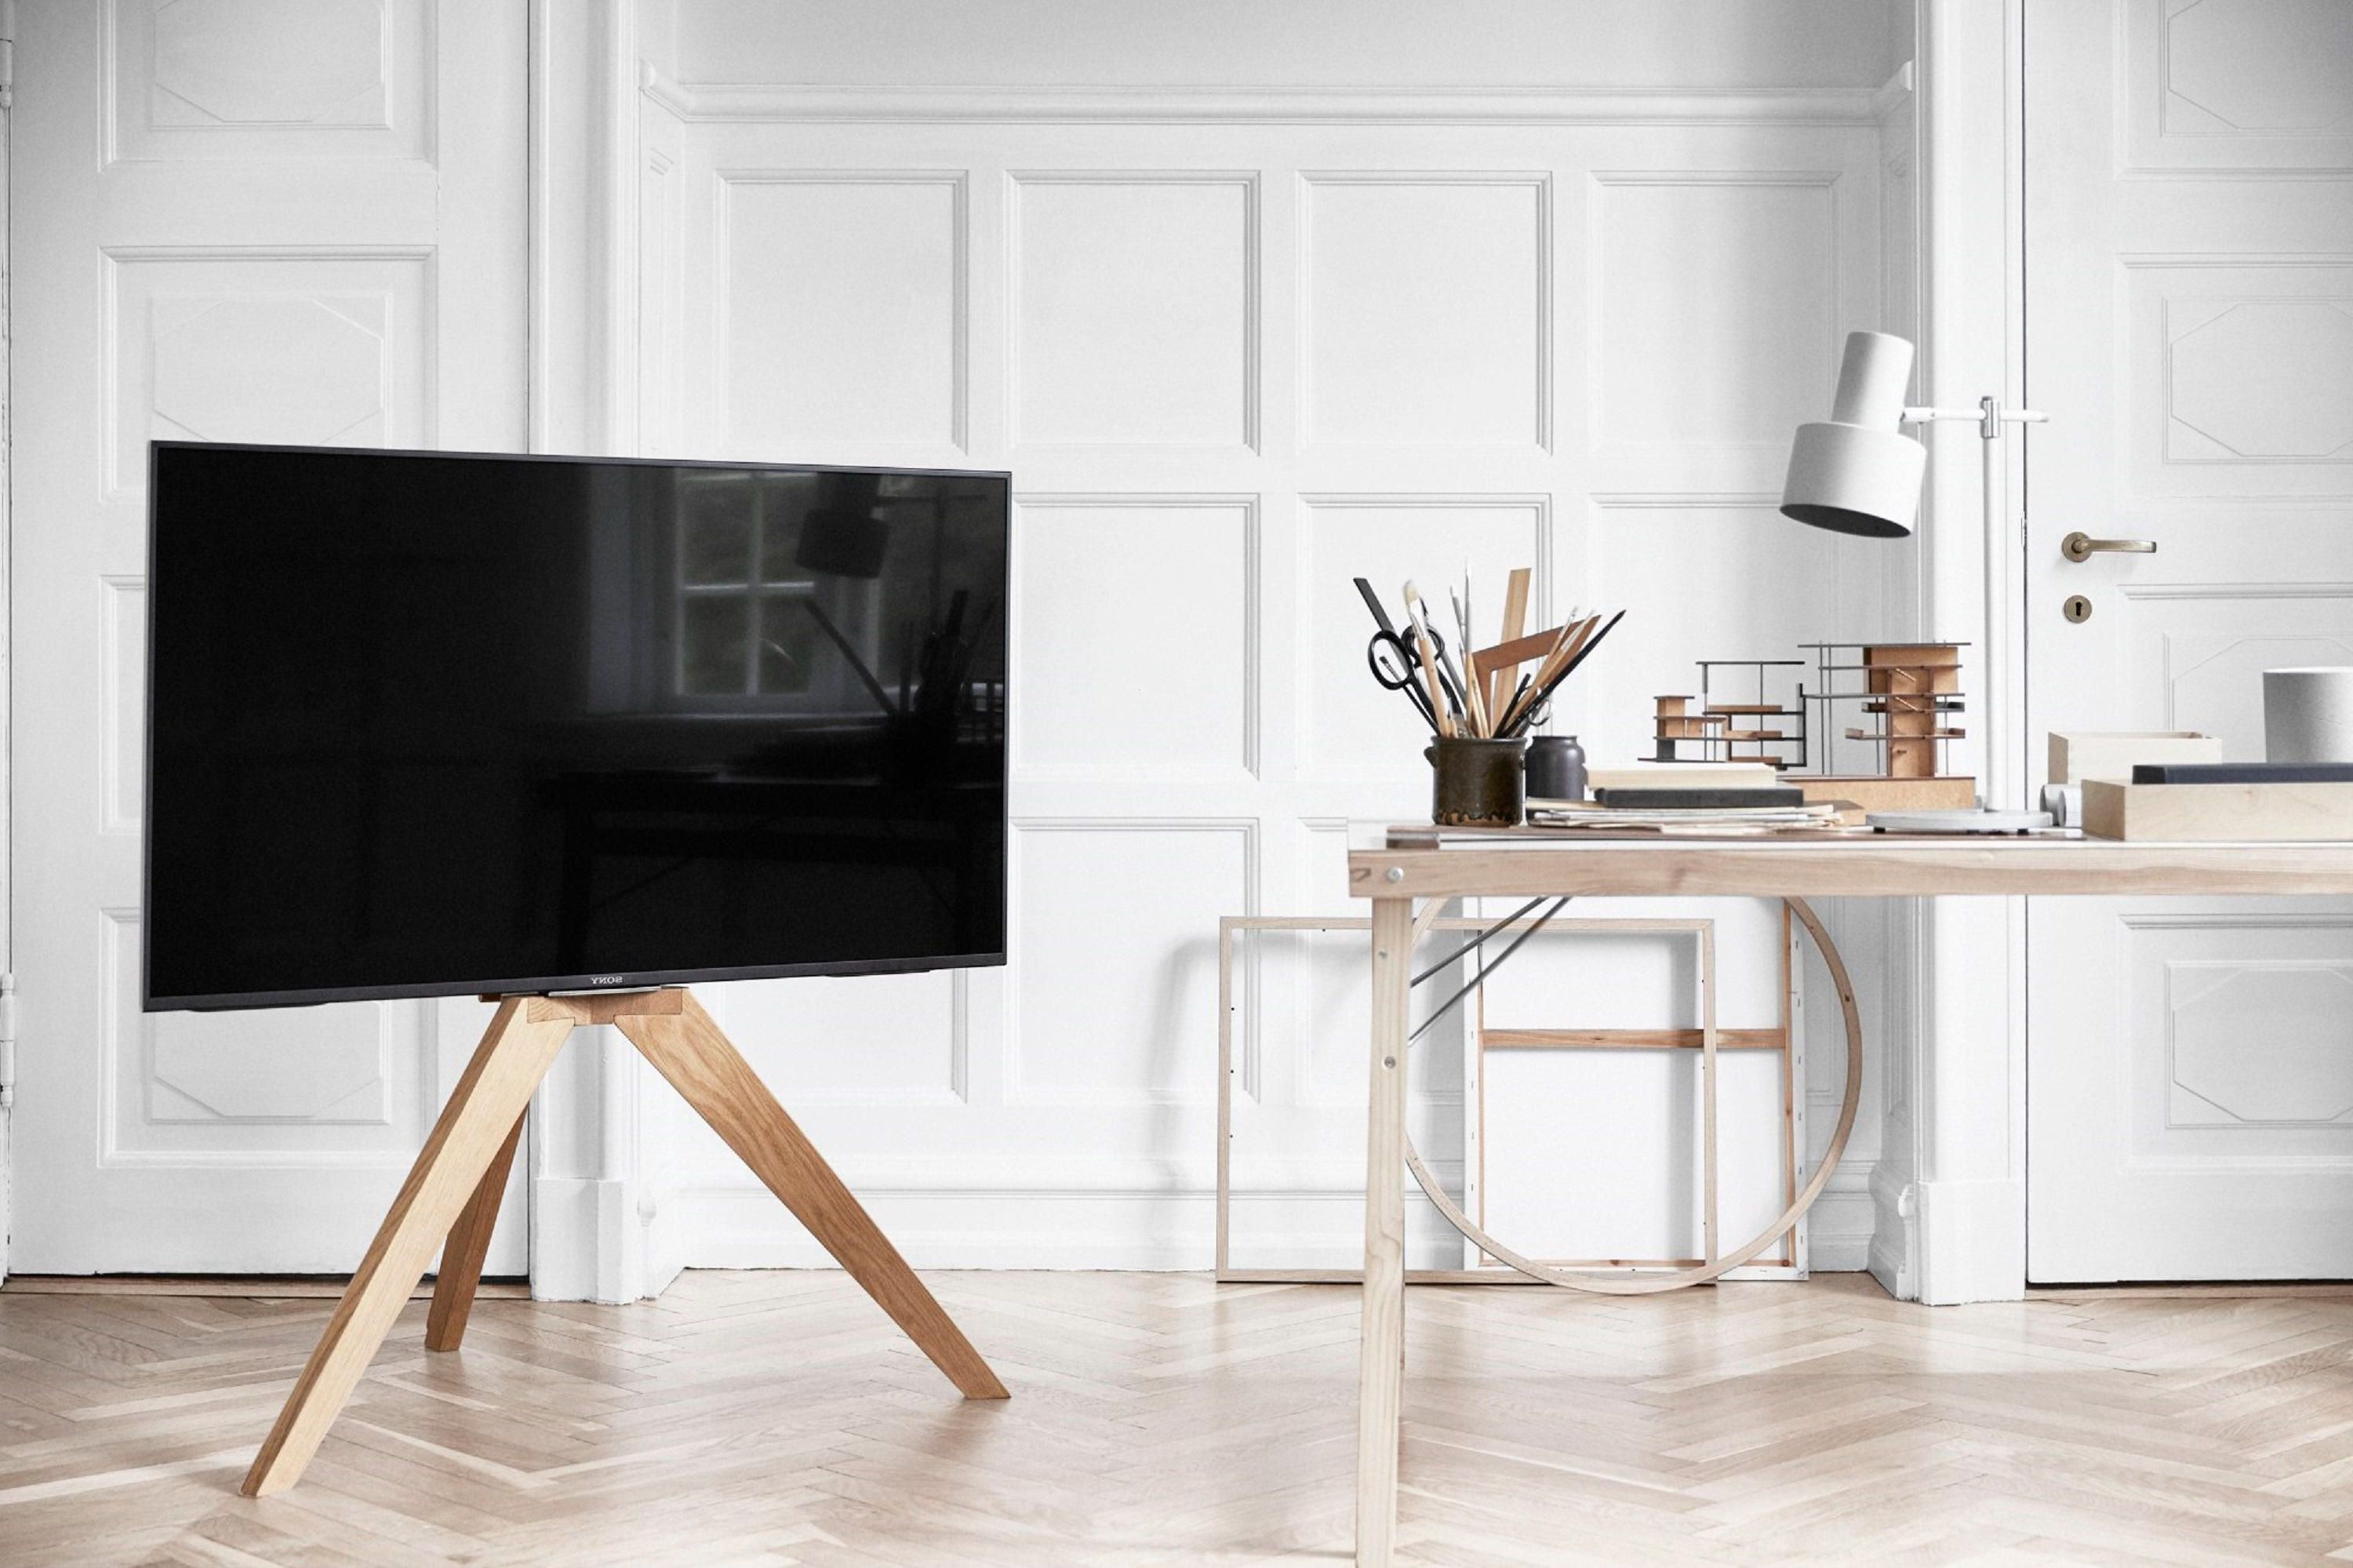 Tv Floor Stand – Designer Multimedia Standsmalte Kidde For Within Fashionable Wood Tv Floor Stands (View 17 of 20)